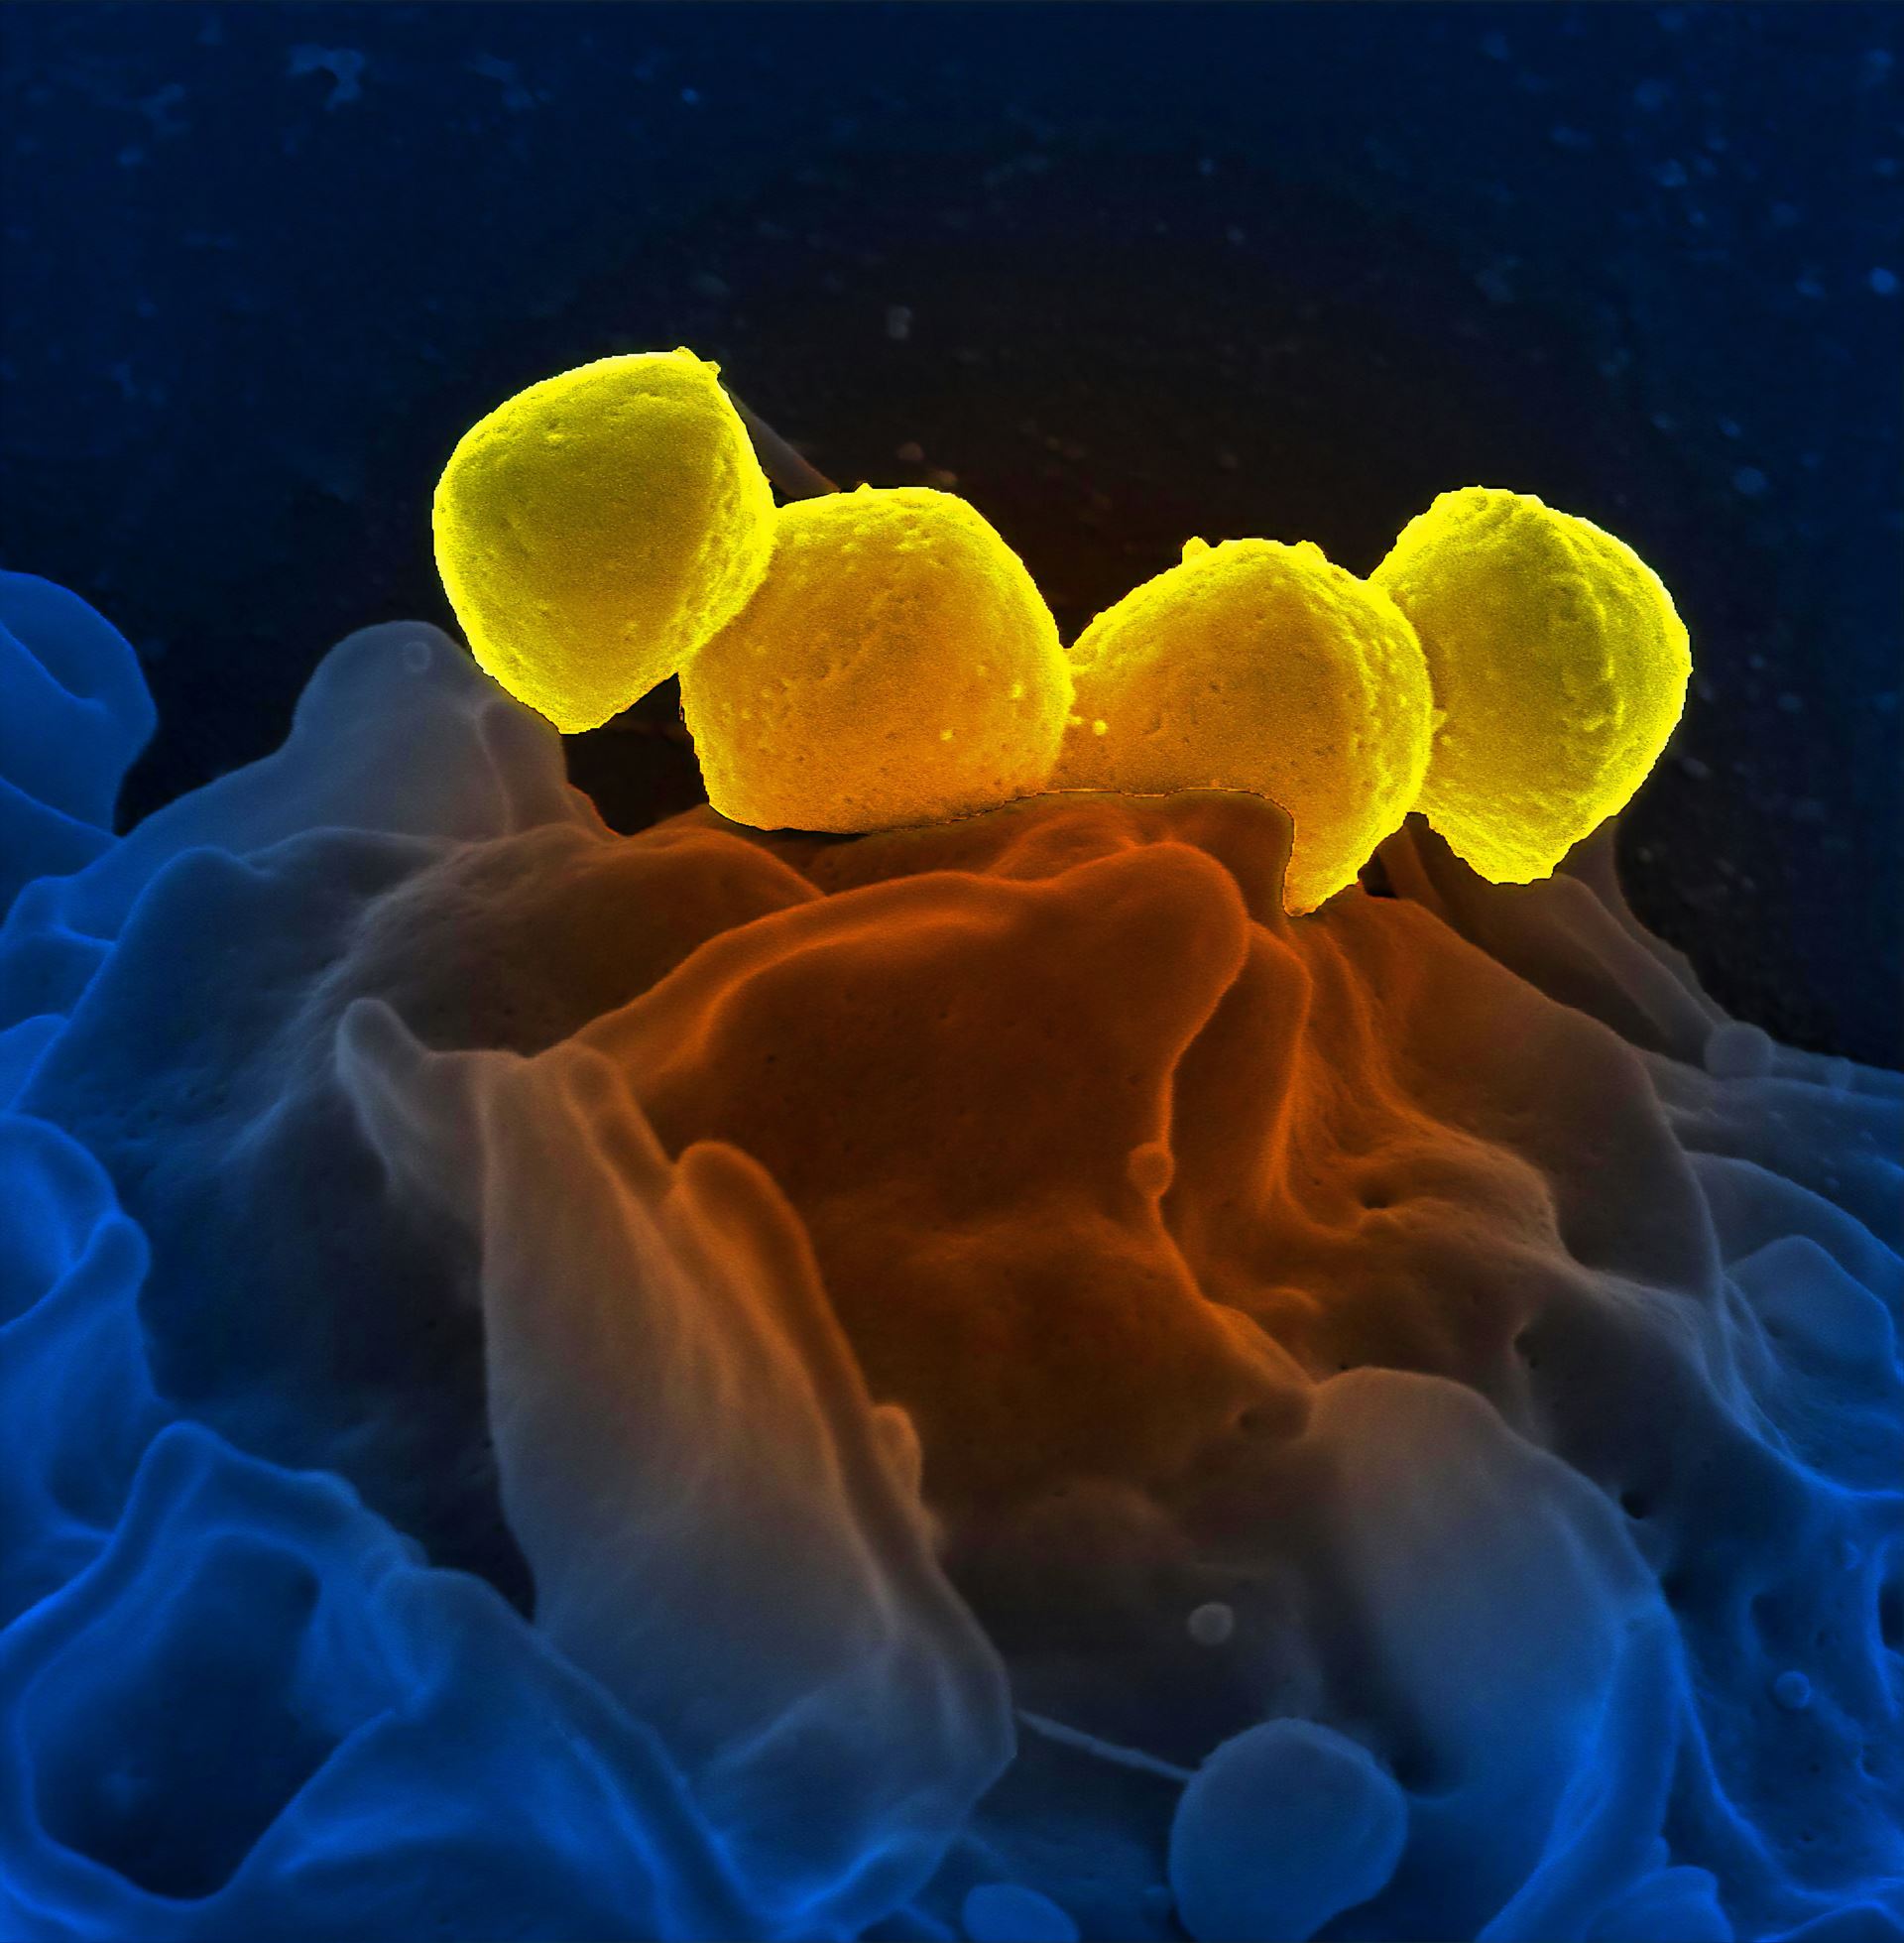 the streptococcus bacteria